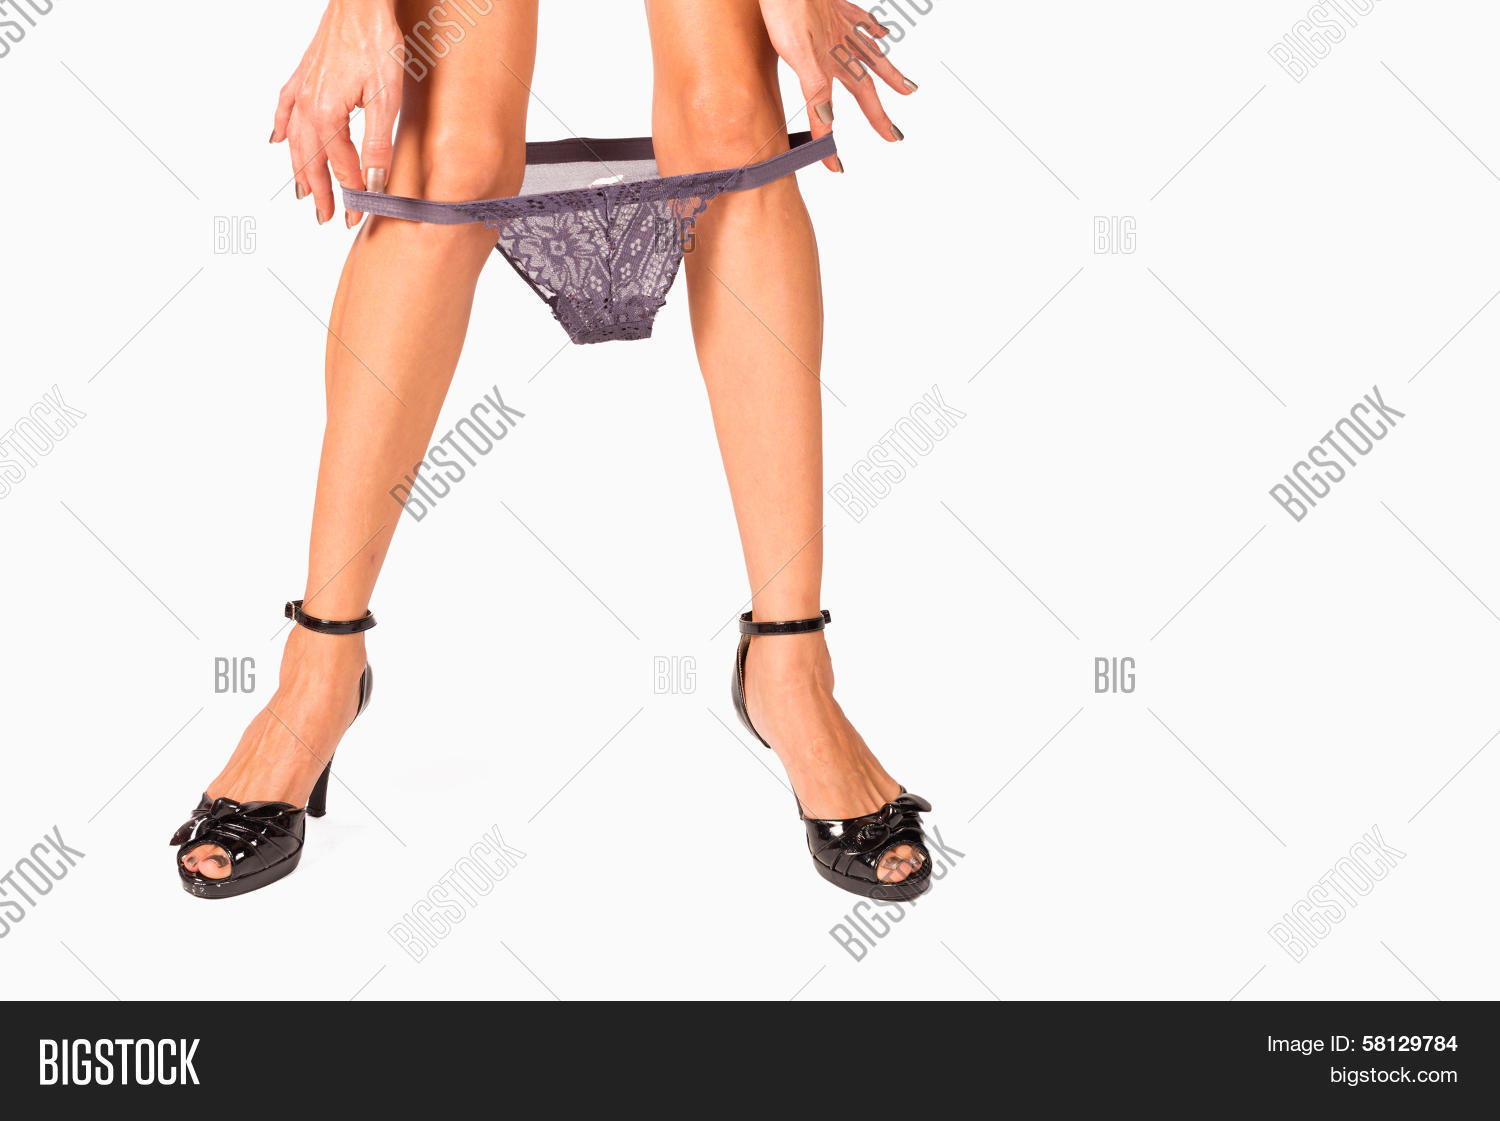 bobby senn share woman pulling down panties photos